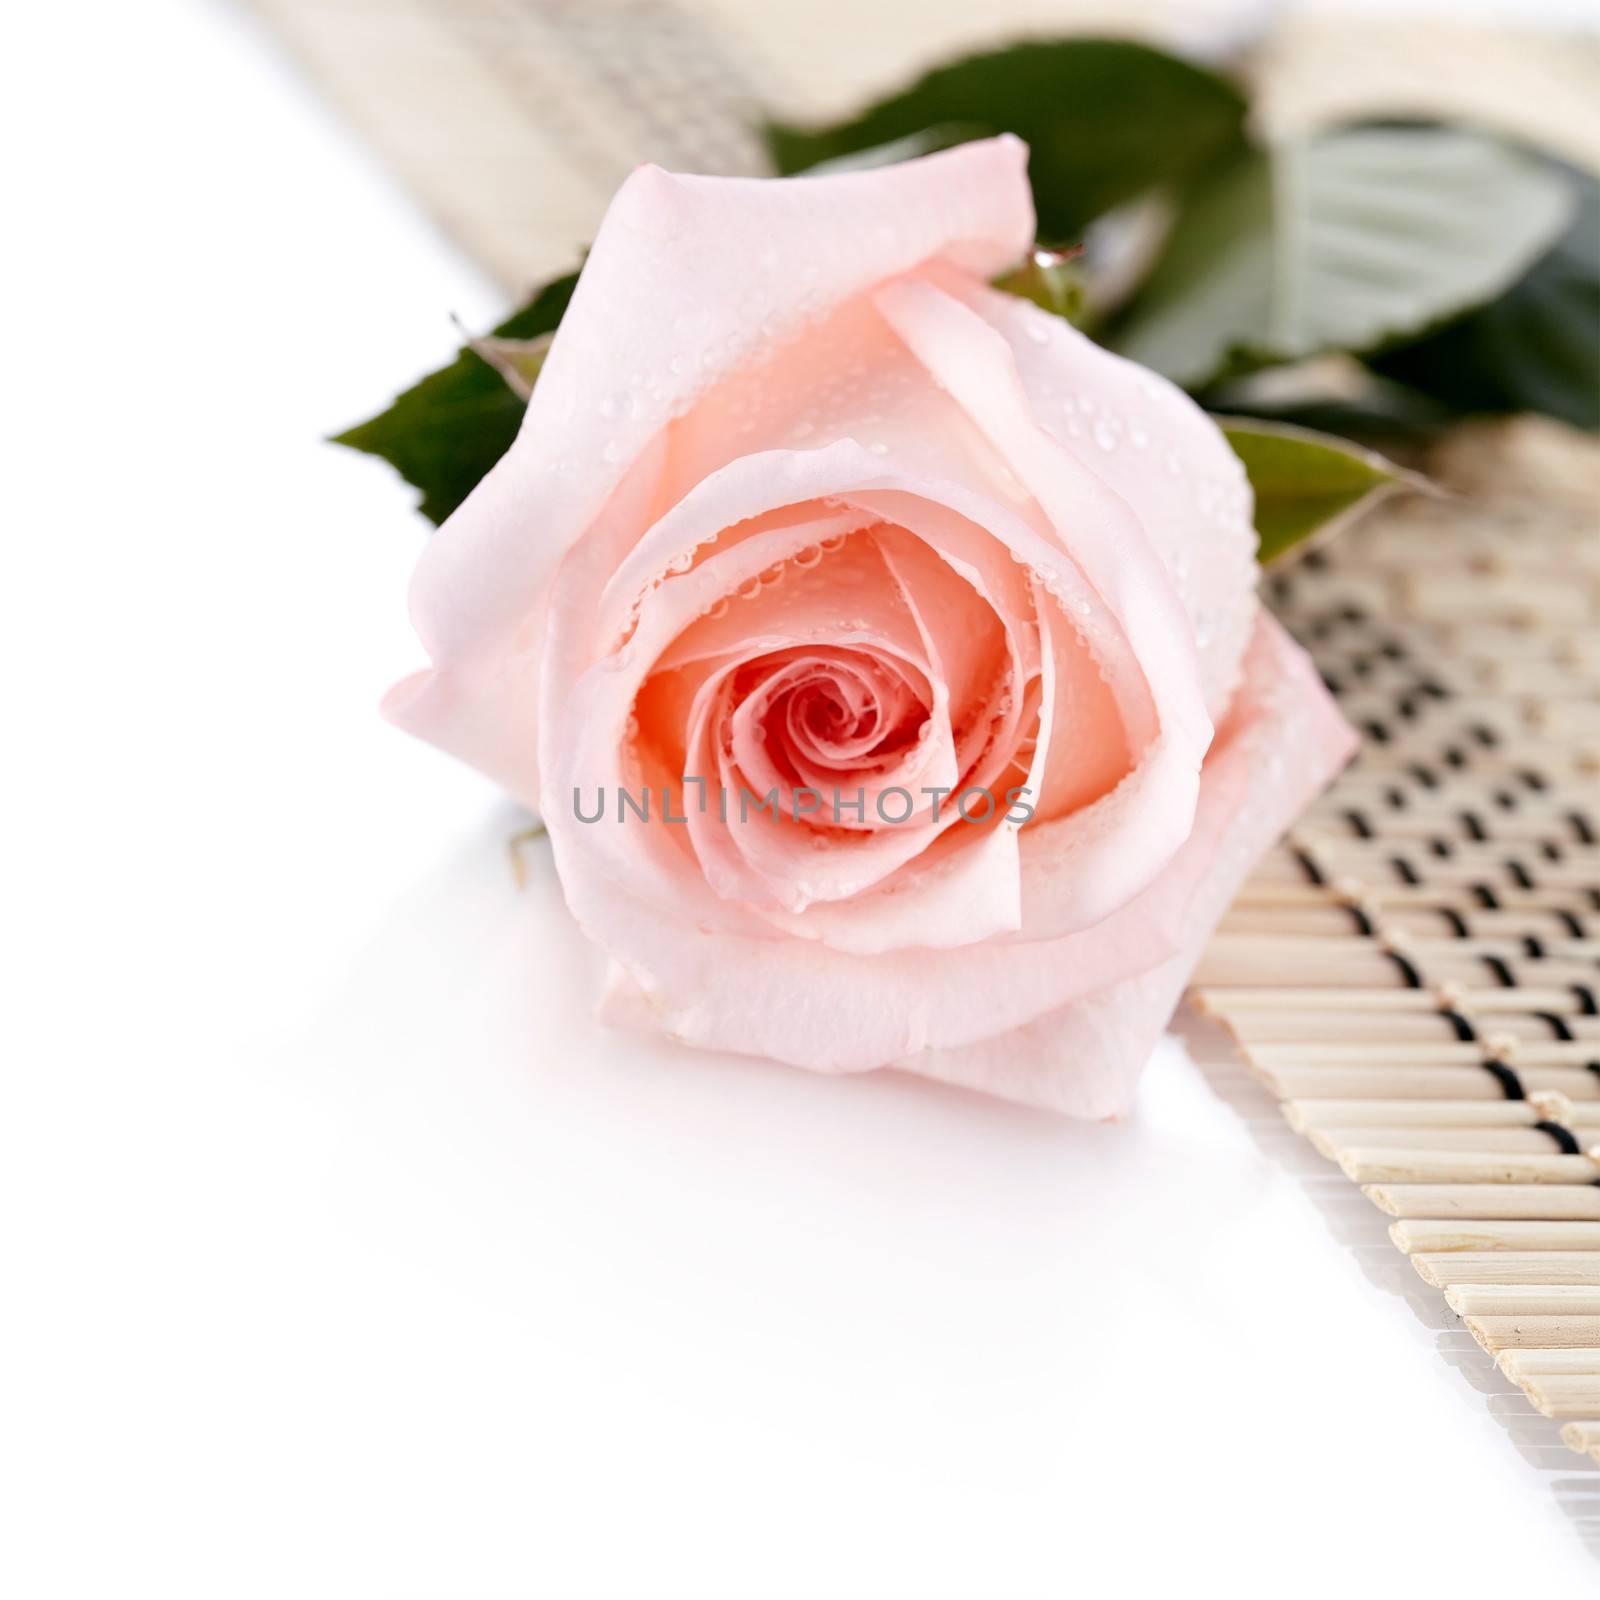 The pink rose lies on a napkin. by Azaliya